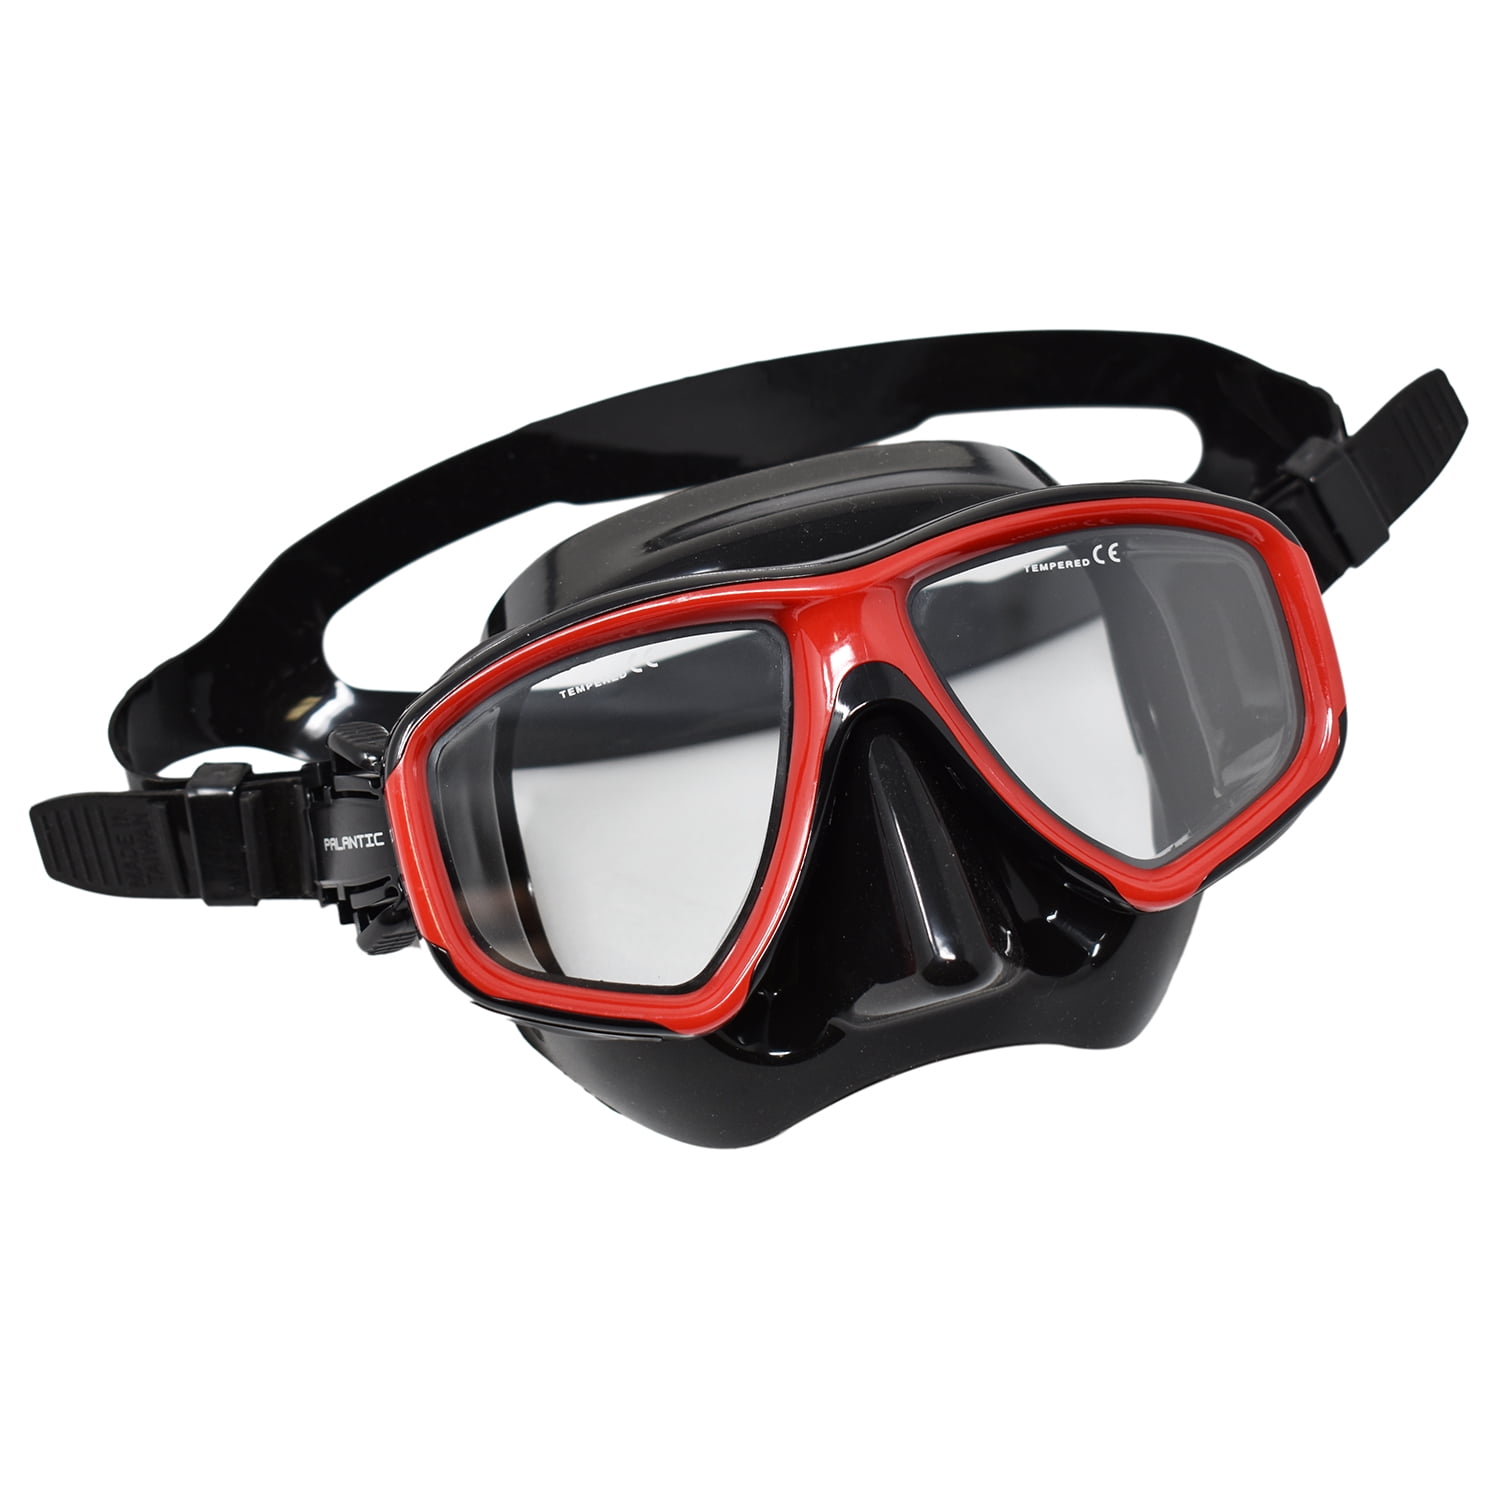 Palantic Black Dive Mask Nearsighted Prescription RX Optical Lenses